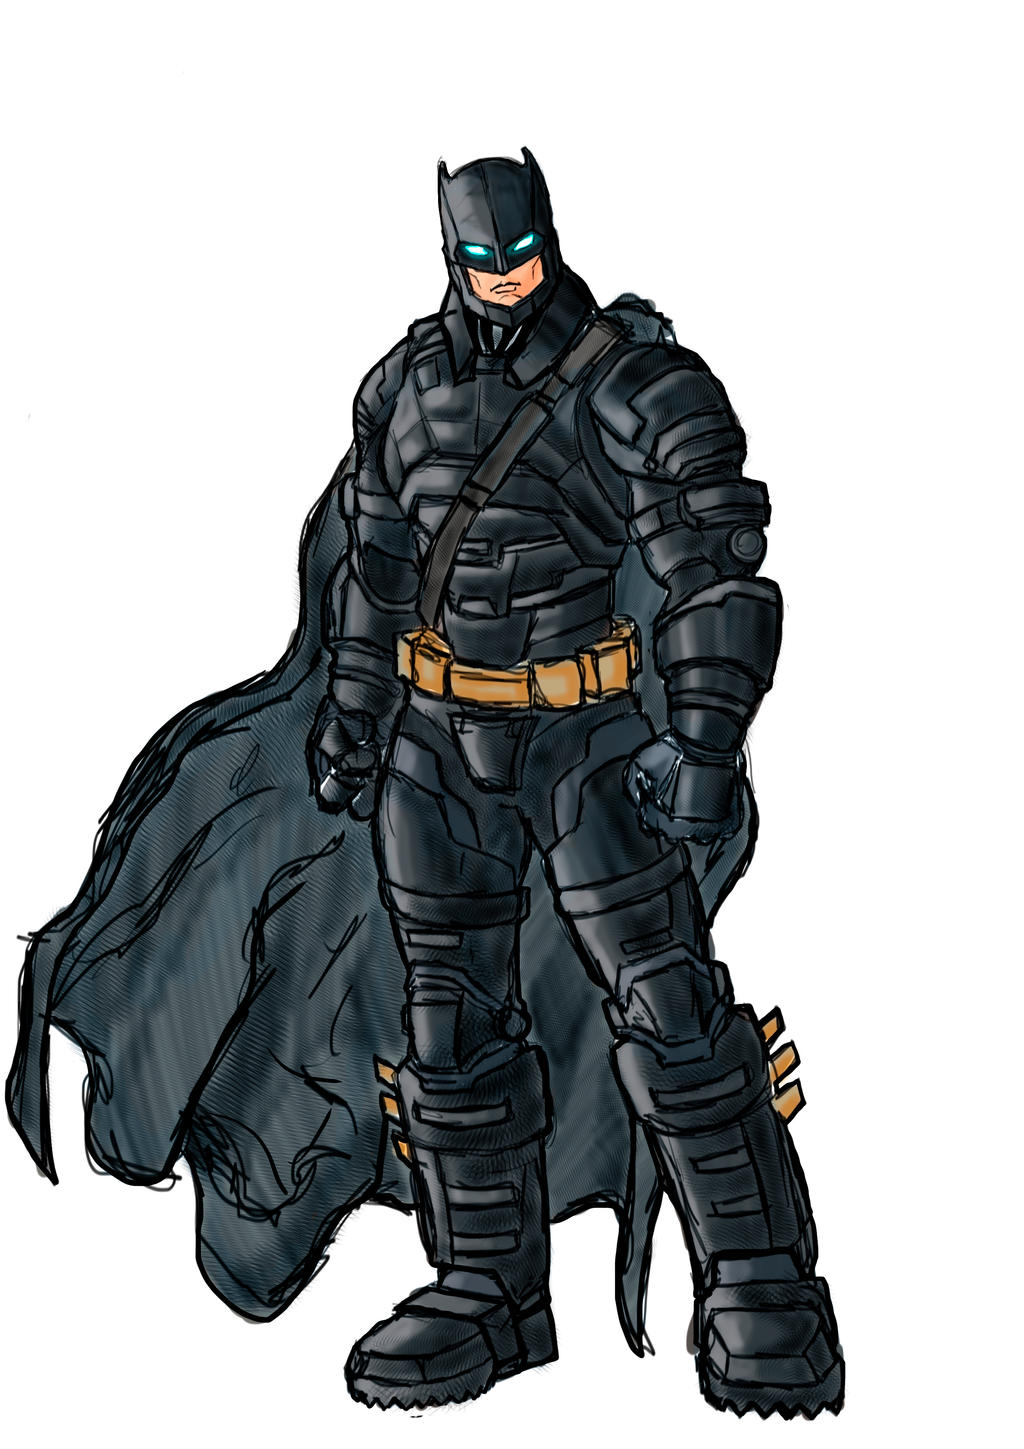 Armored Batman Sketch by CamposBane on DeviantArt